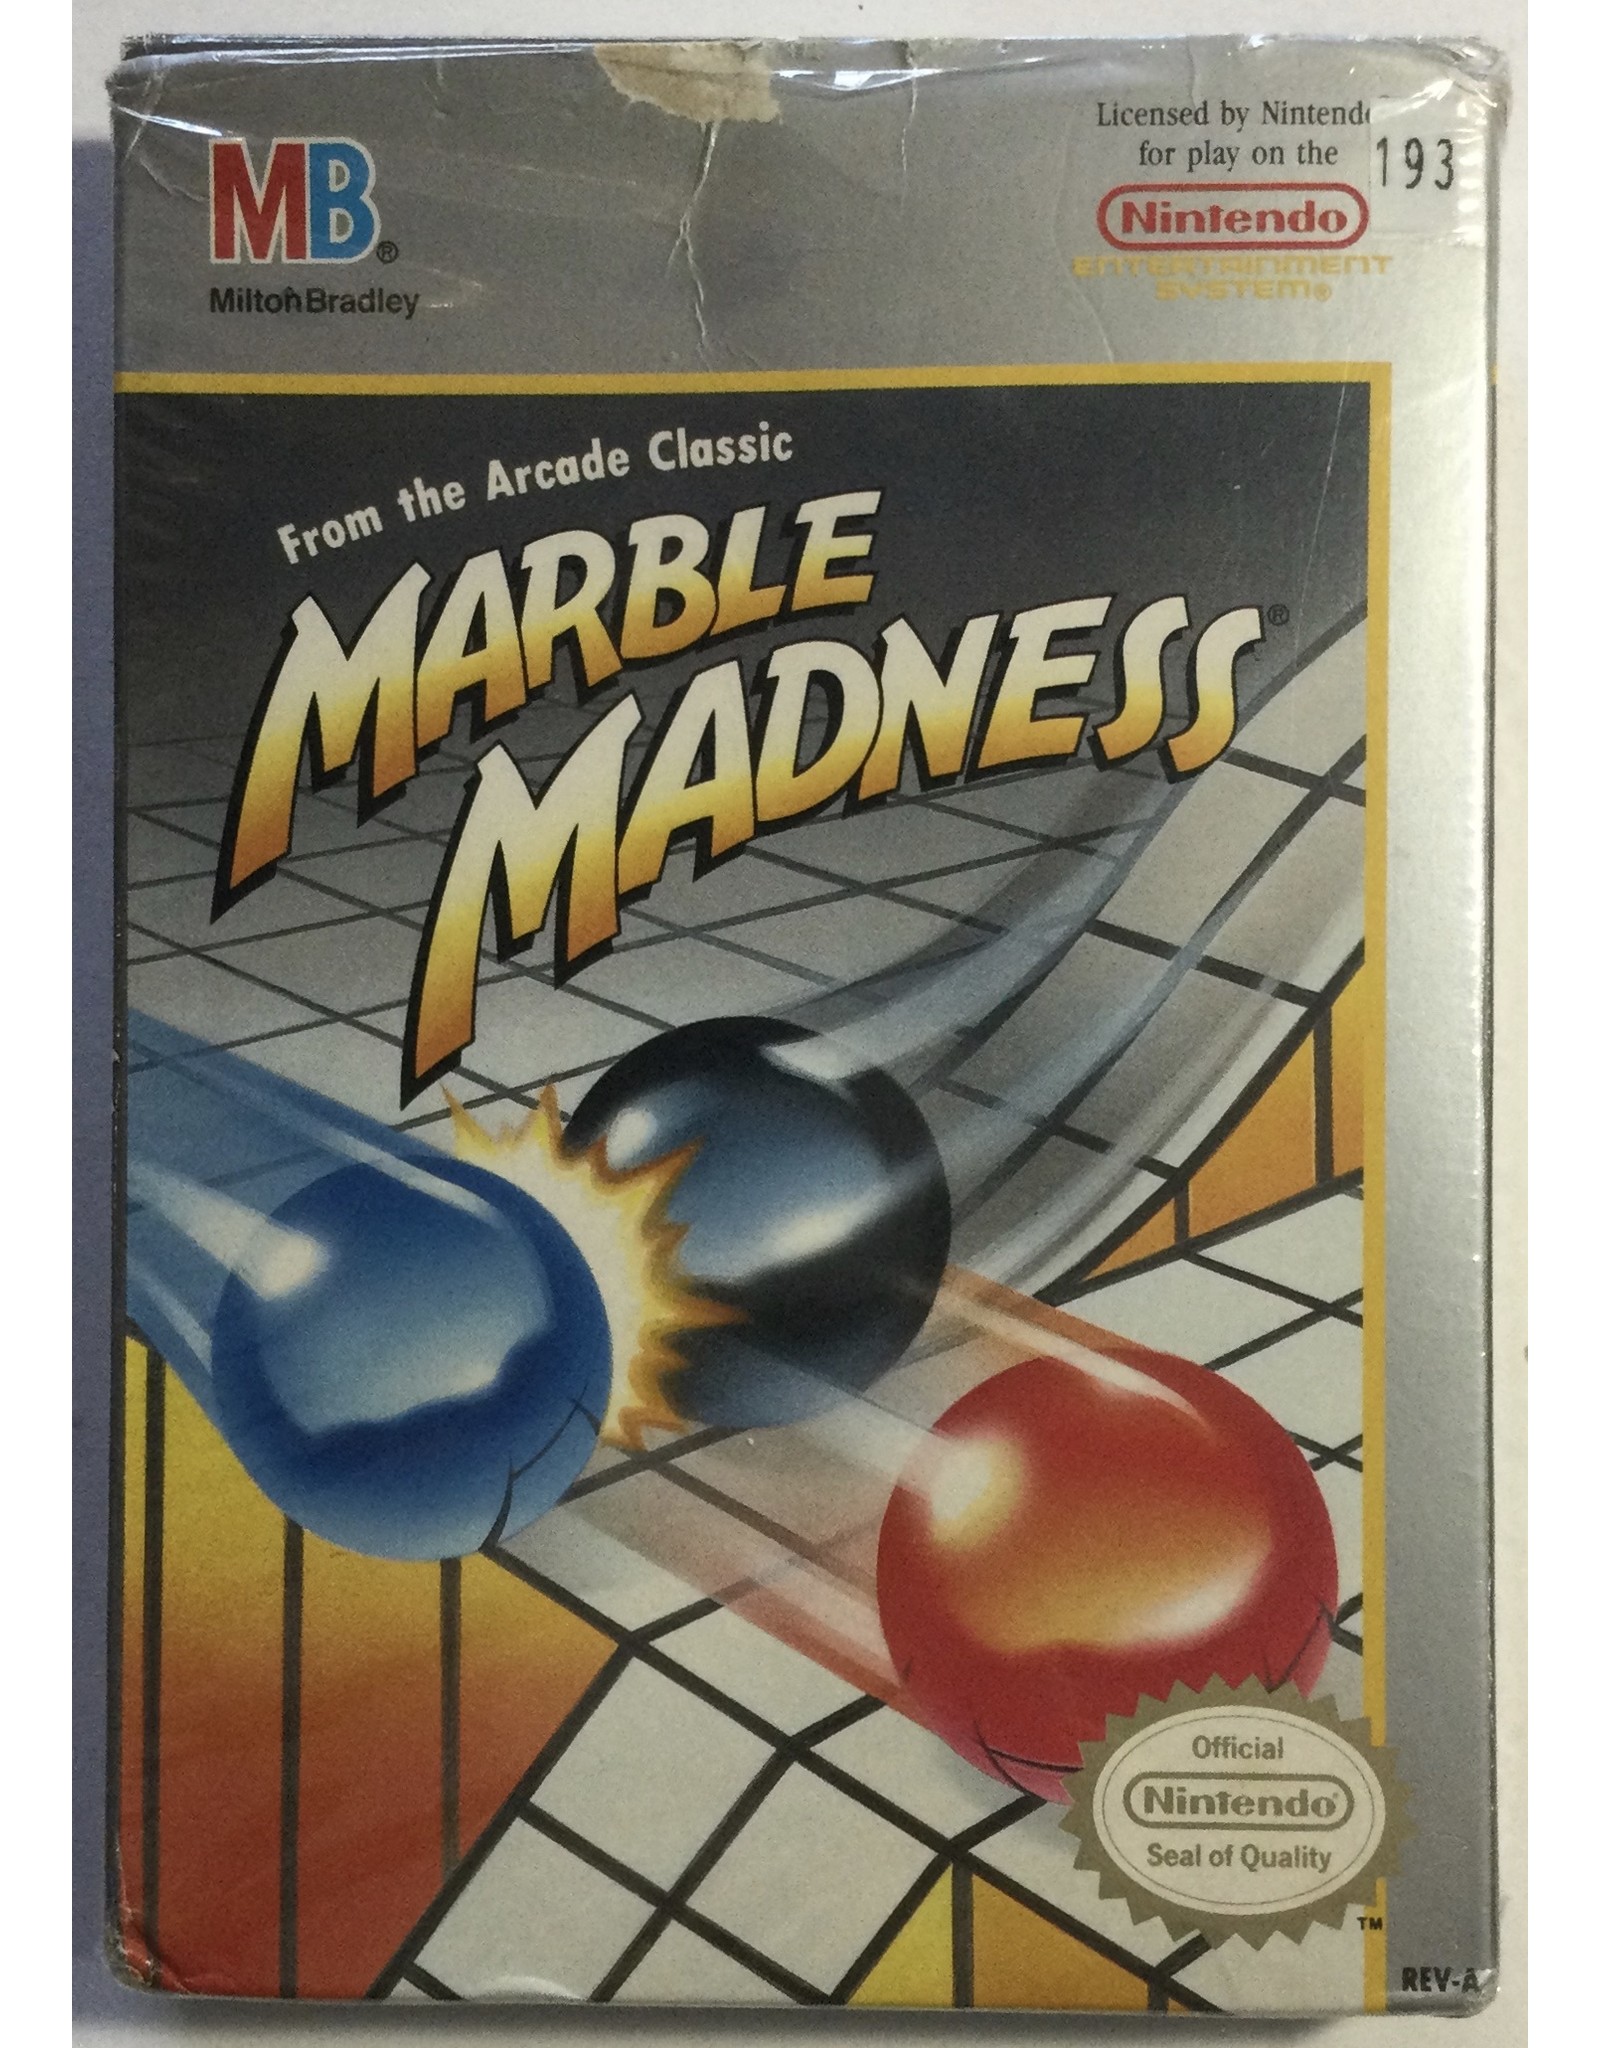 MILTON BRADLEY Marble Madness for Nintendo Entertainment System (NES) - CIB